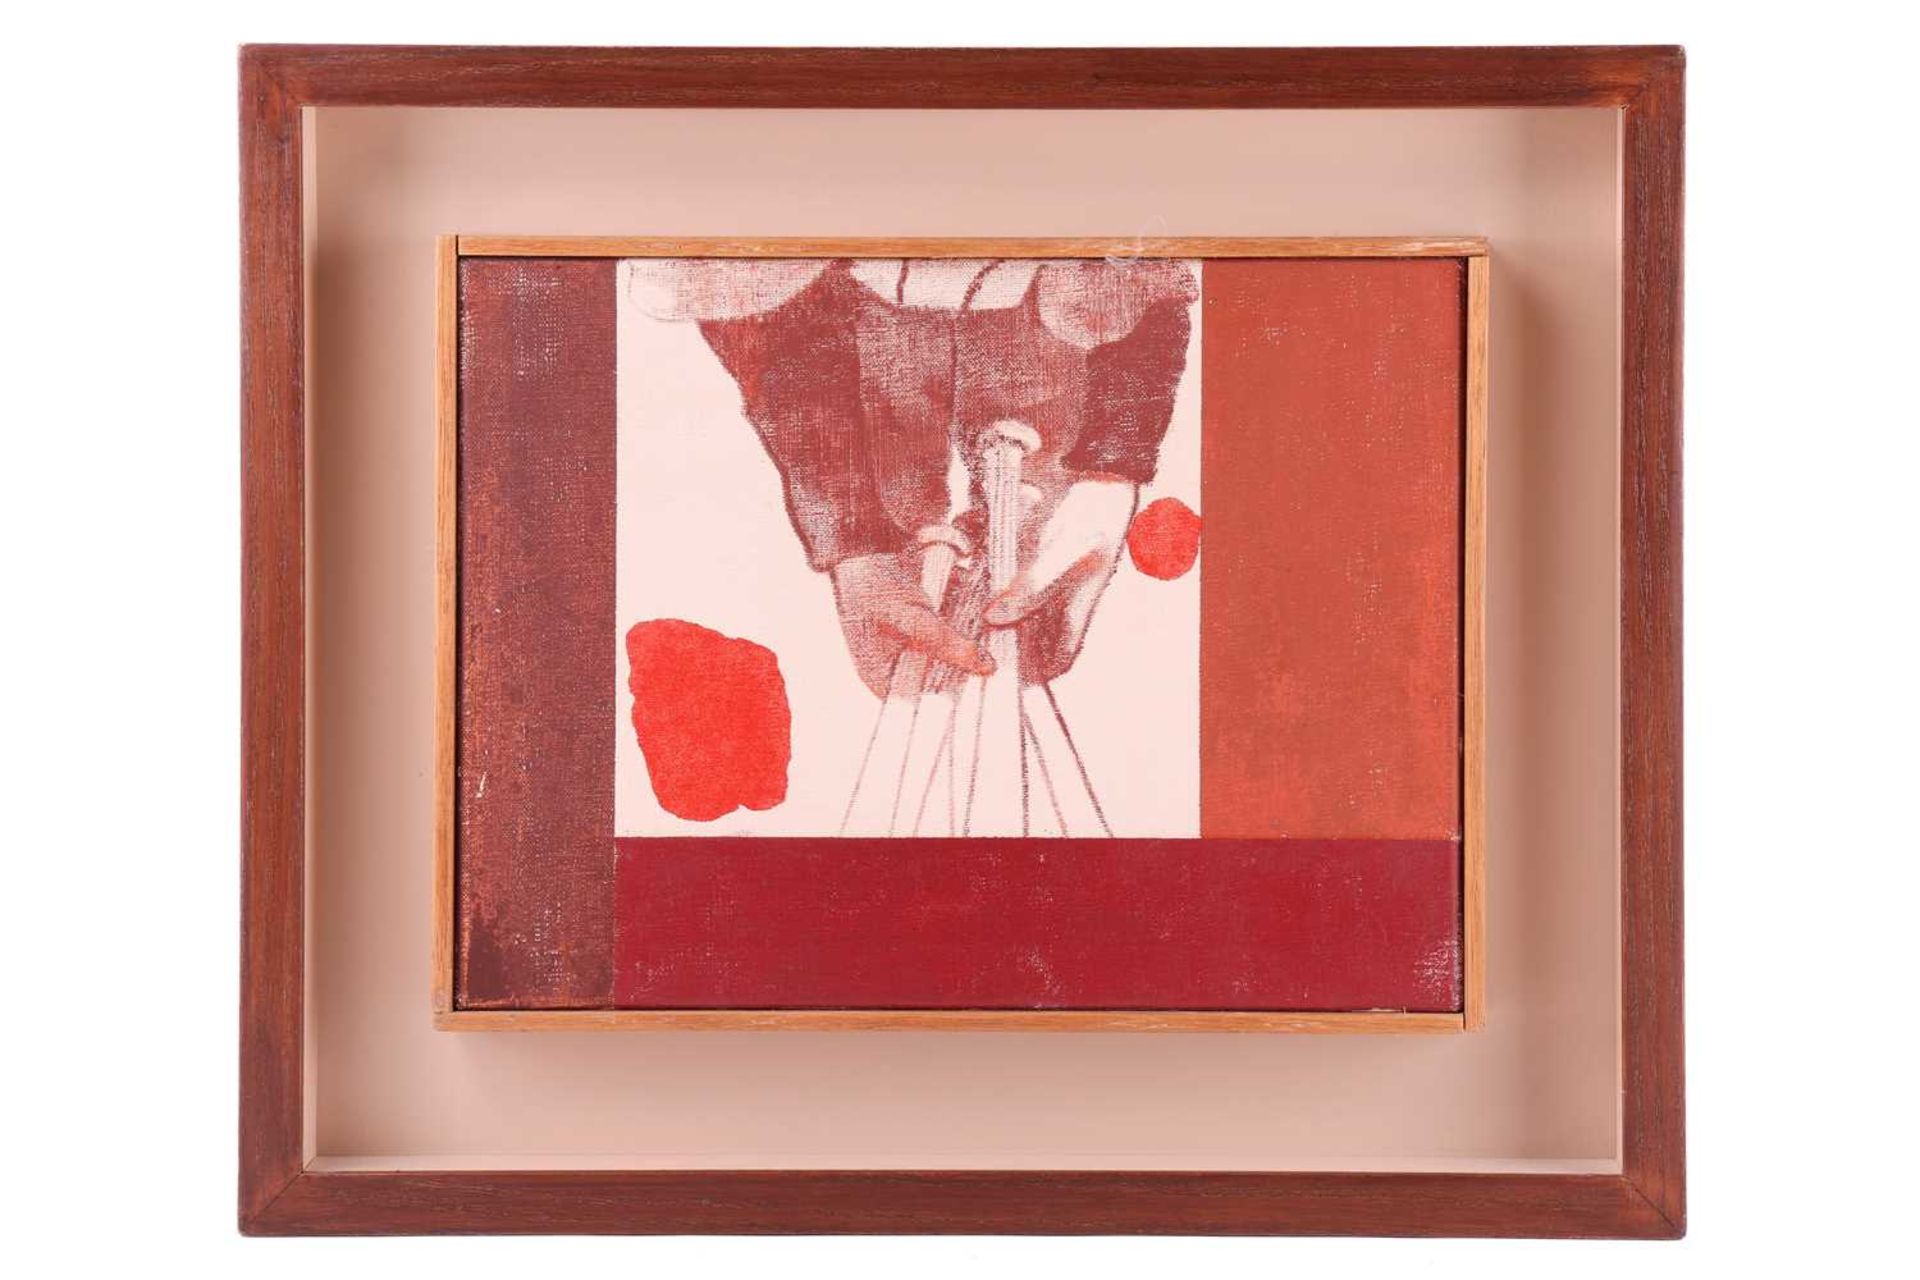 Ronald Brooks Kitaj (1932-2007), 'Batboy' (1967), inscribed verso, oil on canvas, 30.5 x 40.5 cm, fr